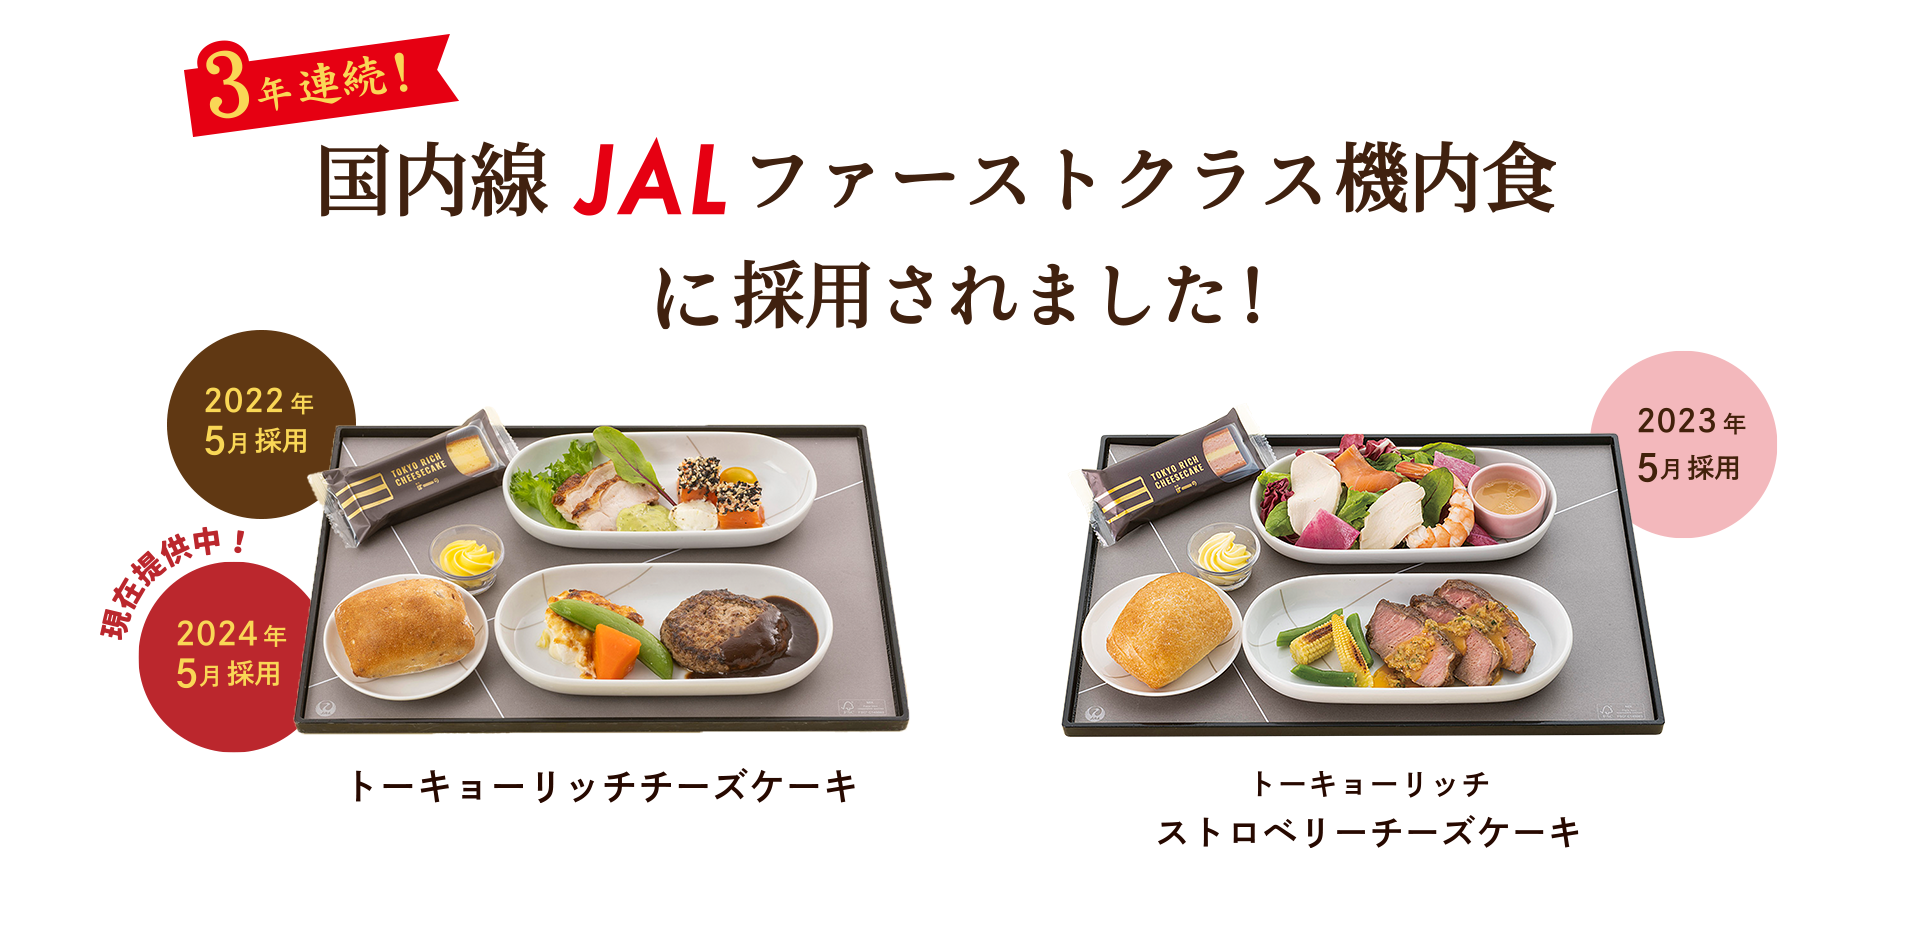 JAL国内線 ファーストクラス機内食に採用されました！